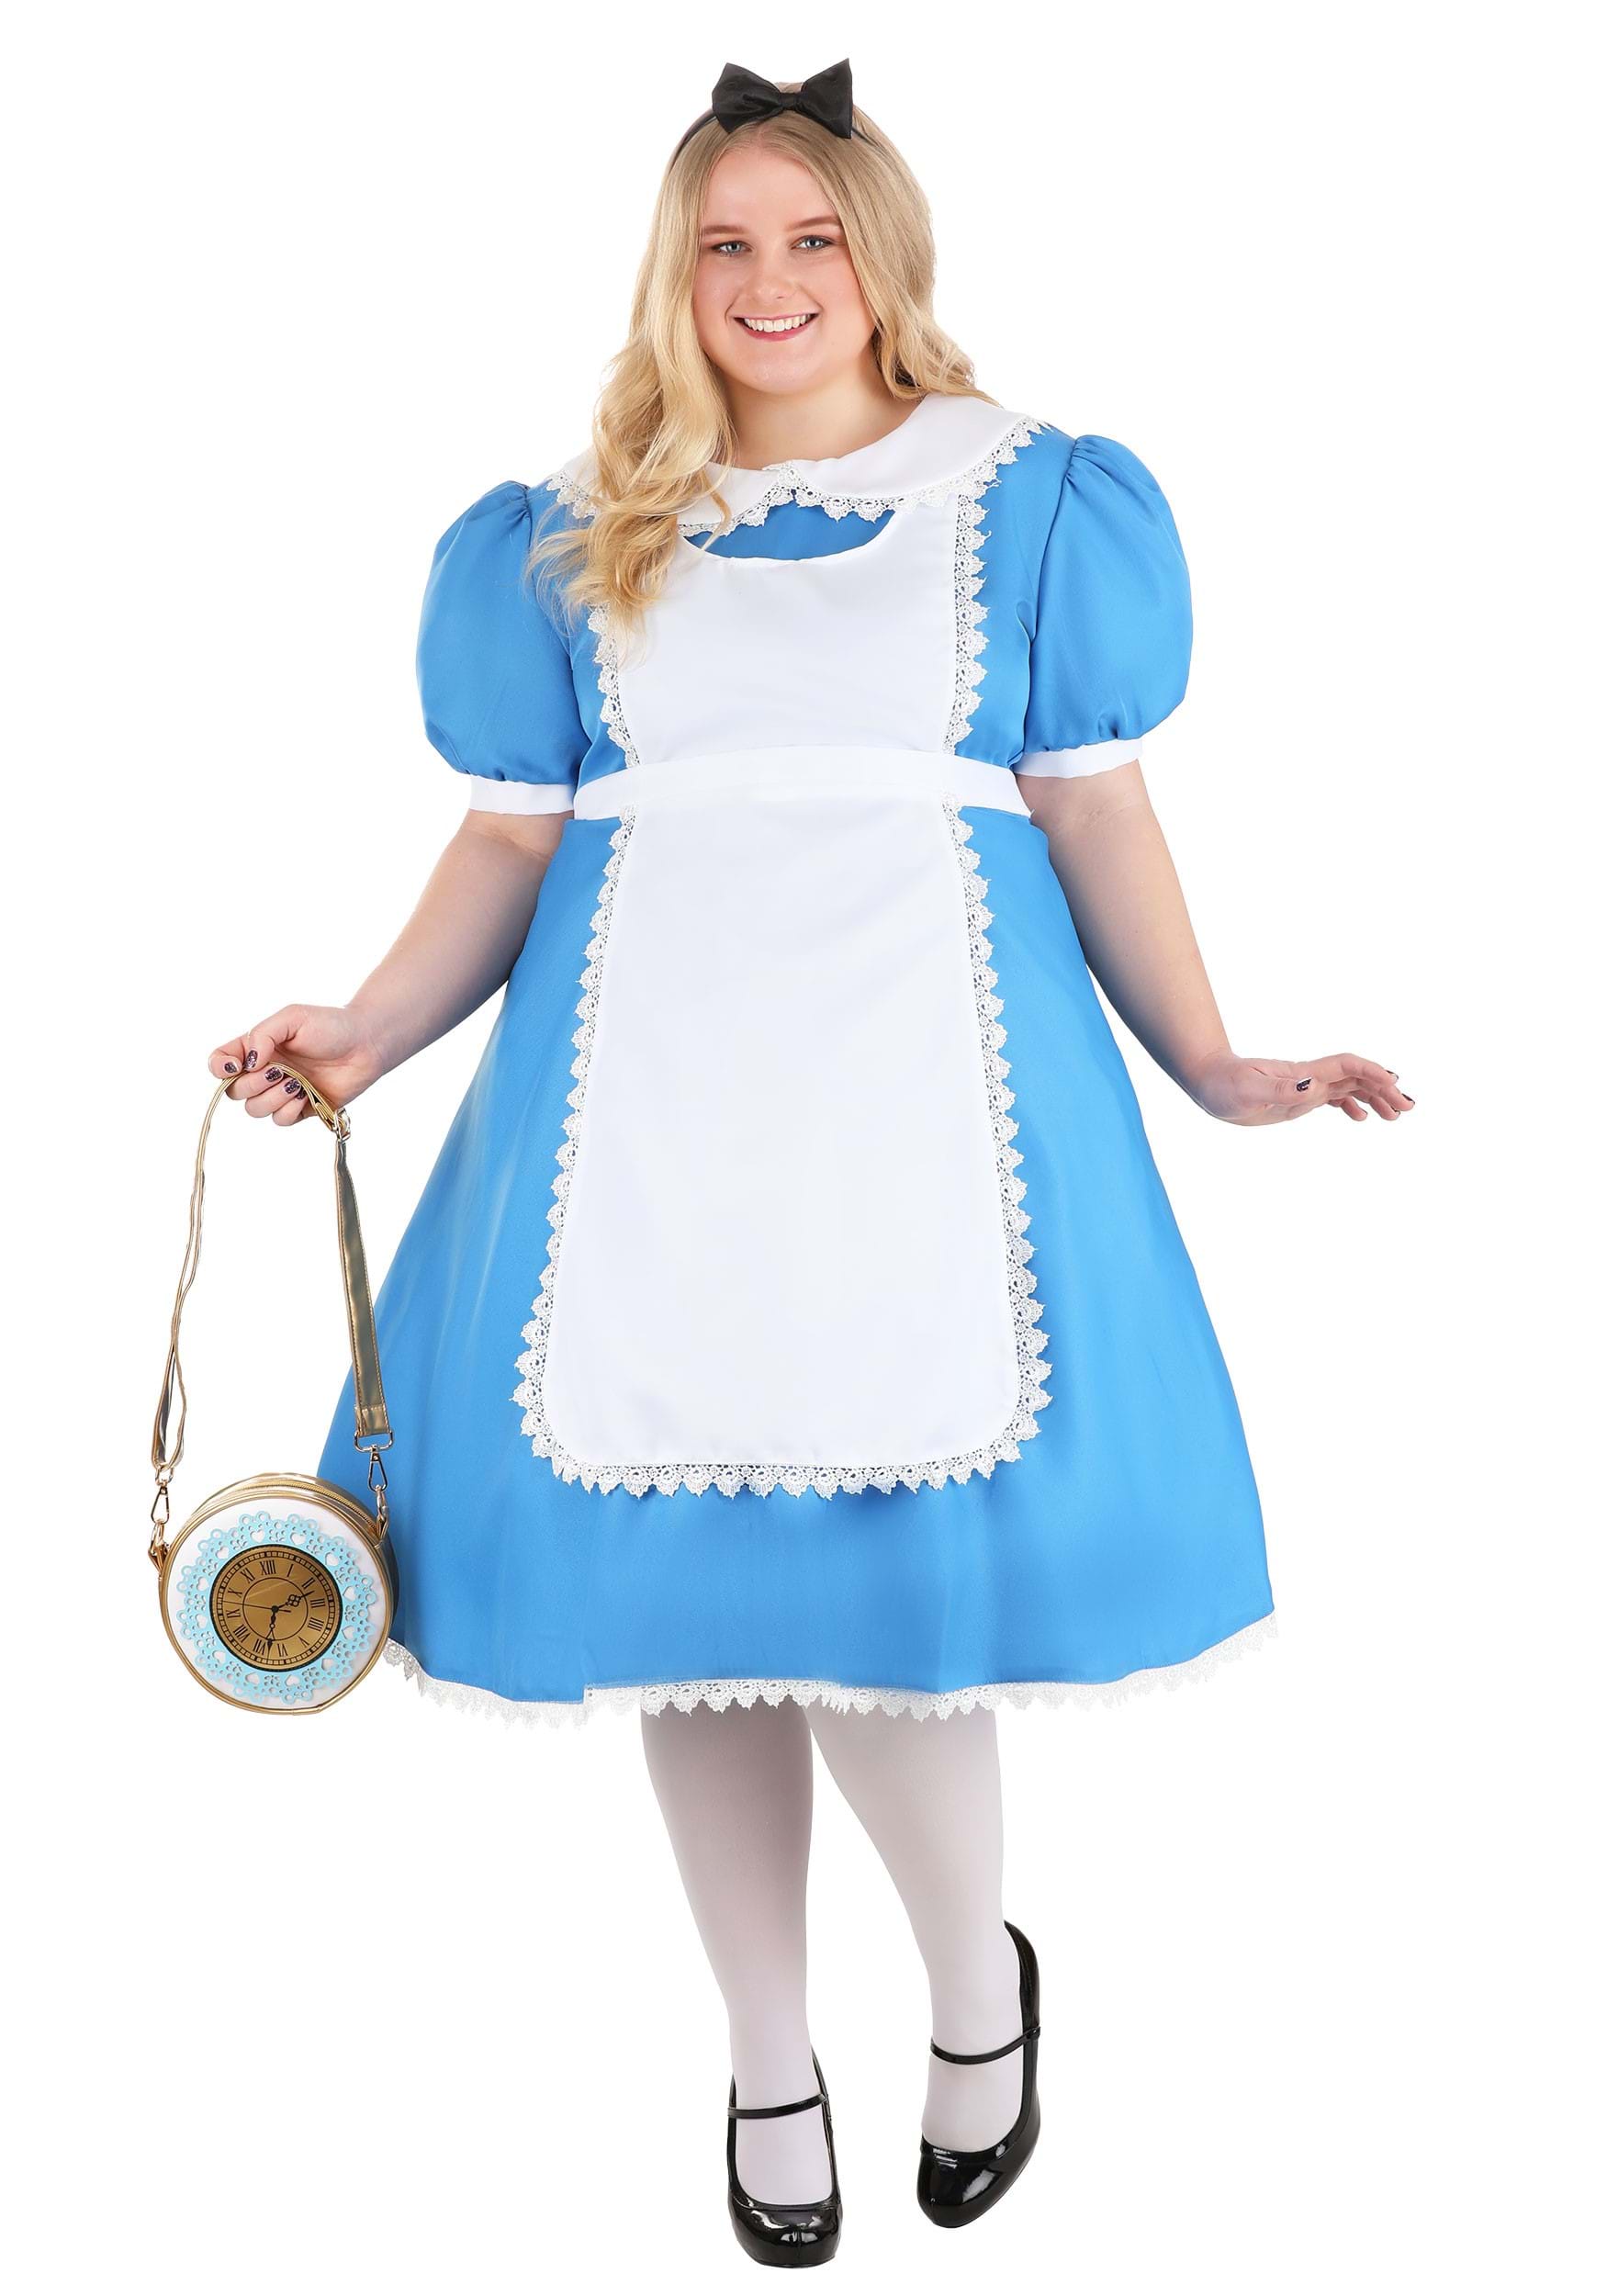 Plus Size Disney Costumes 2017 - Women's Characters  Plus size disney  costumes, Disney themed outfits, Plus size disney